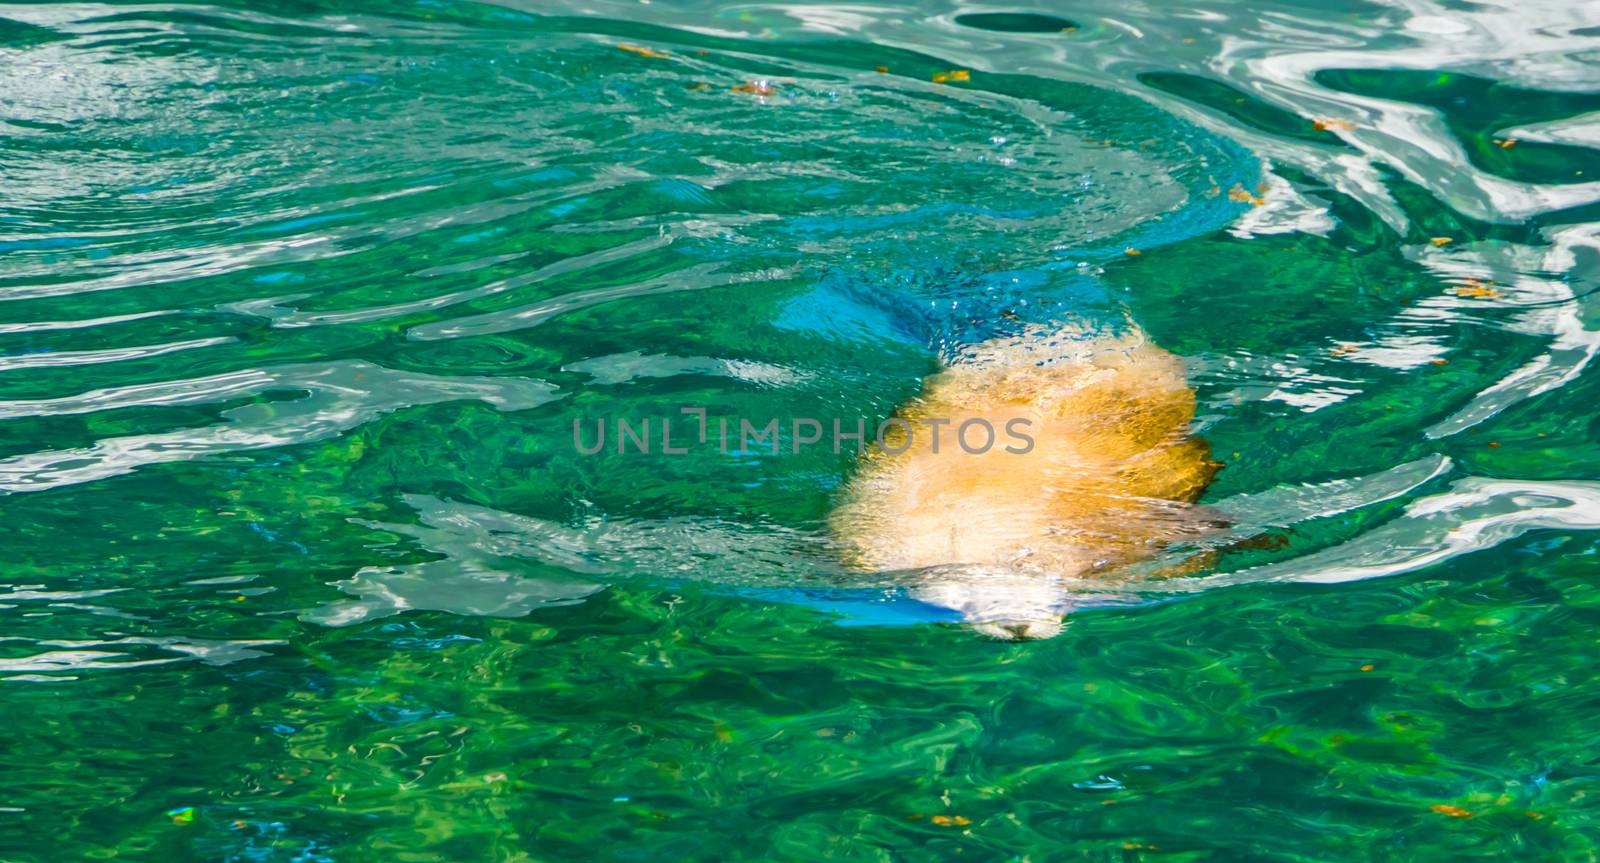 Sea lion swimming under water in closeup, Eared seal specie, marine life animals by charlottebleijenberg